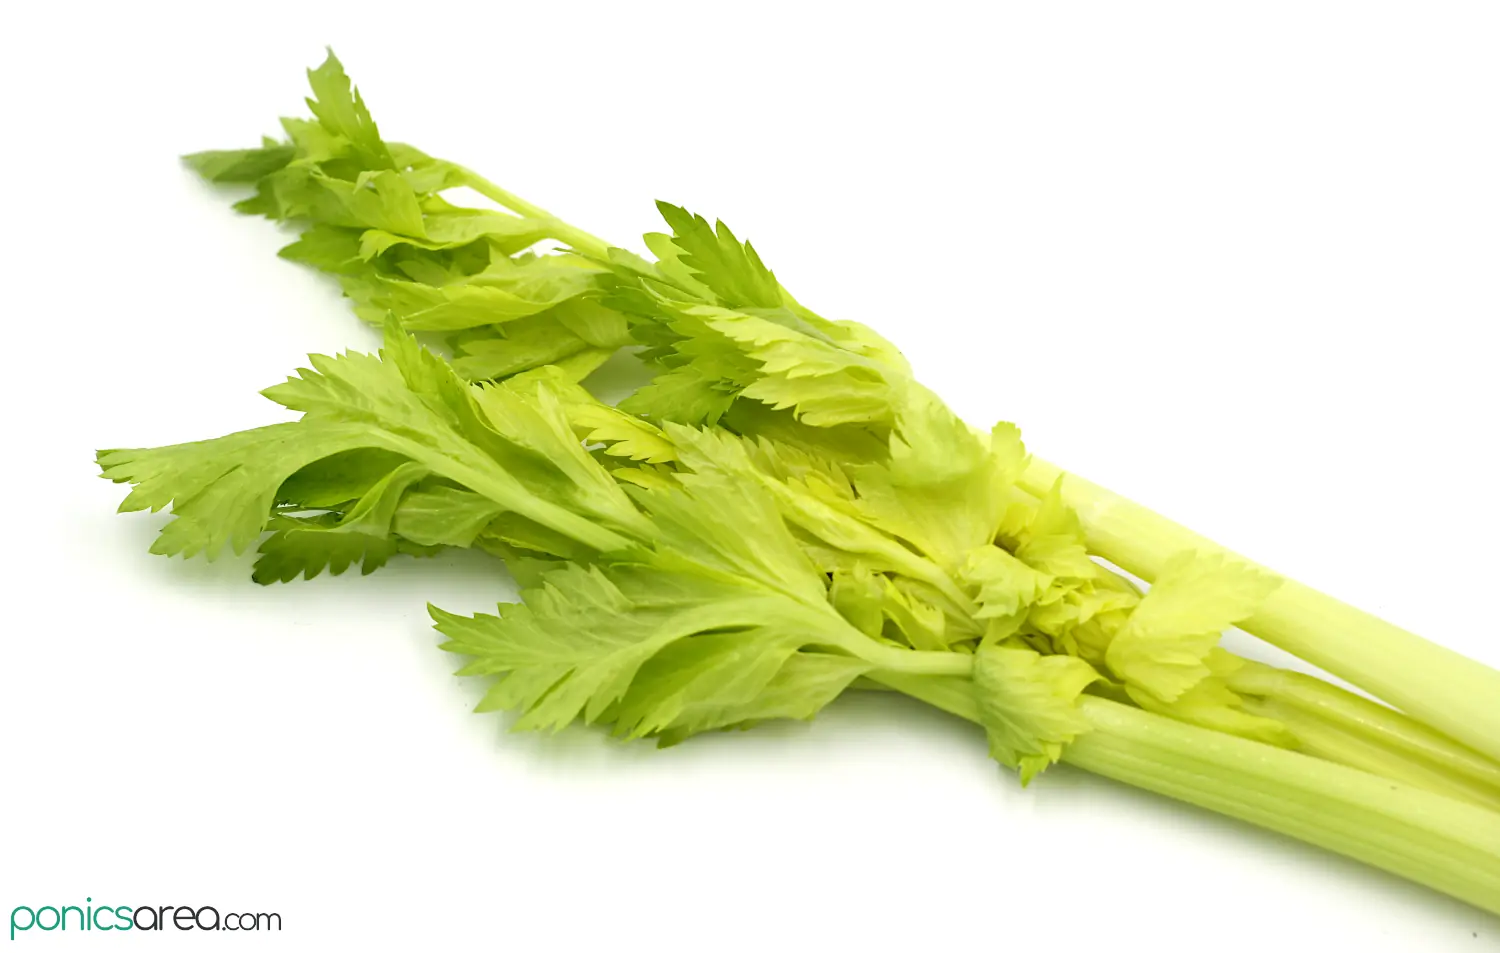 celery is a leaf and leafstalk vegetable